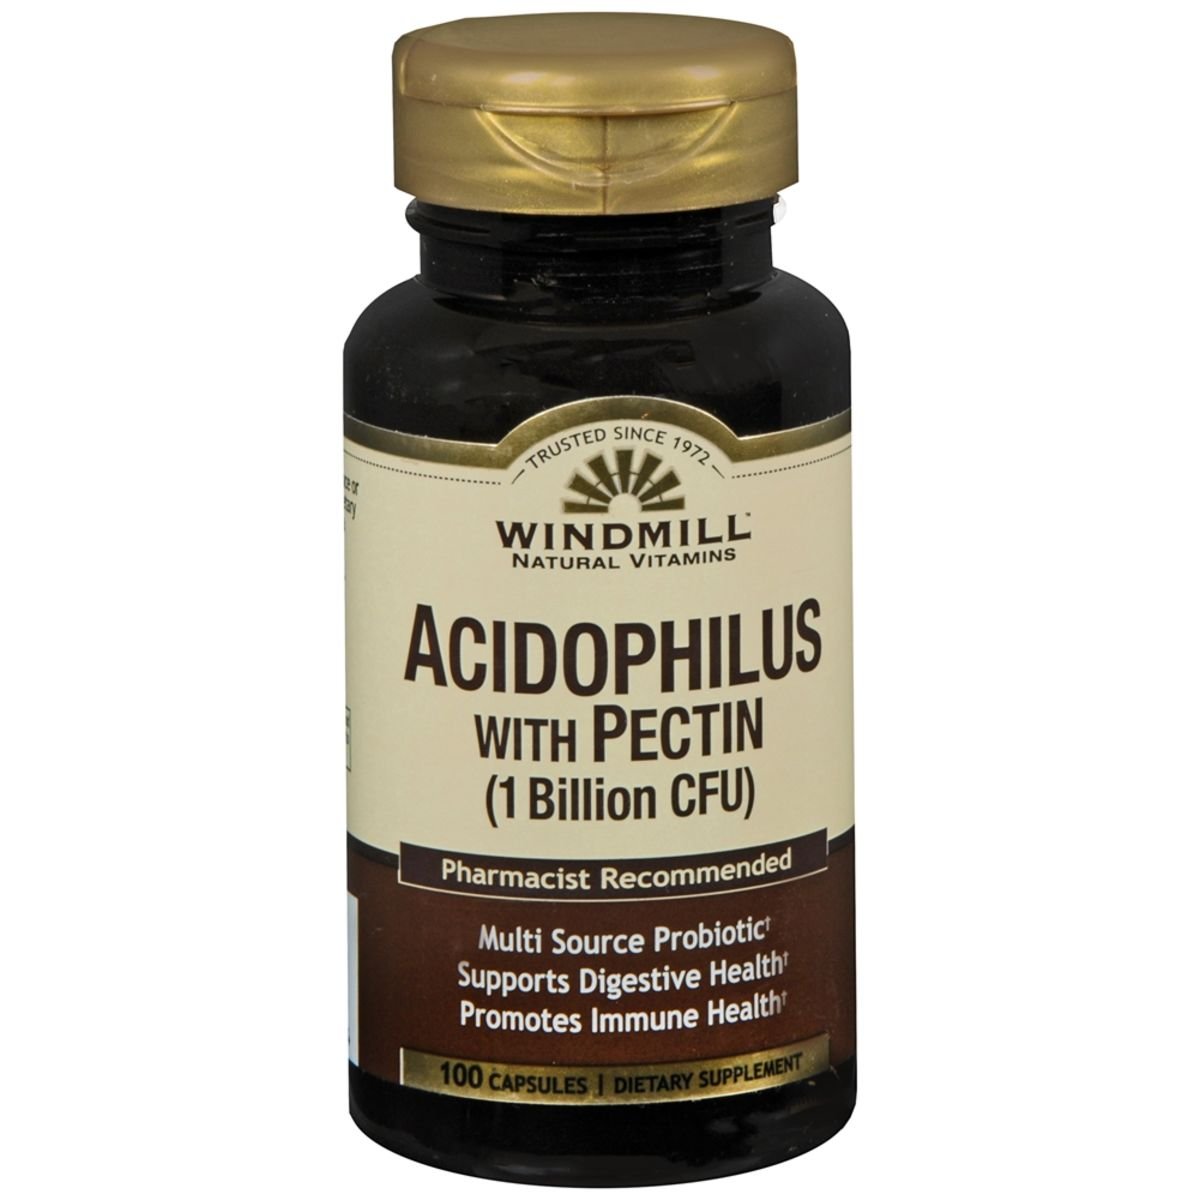 Пробиотик отзывы взрослых. Пробиотик с ягодой. Acidophilus with Pectin natures Plus. Windmill natural Vitamins - b-Complex with Vitamin c &amp; Iron - Unflavored - 100 Tablets. Vicolive Multi Probiotic отзывы.